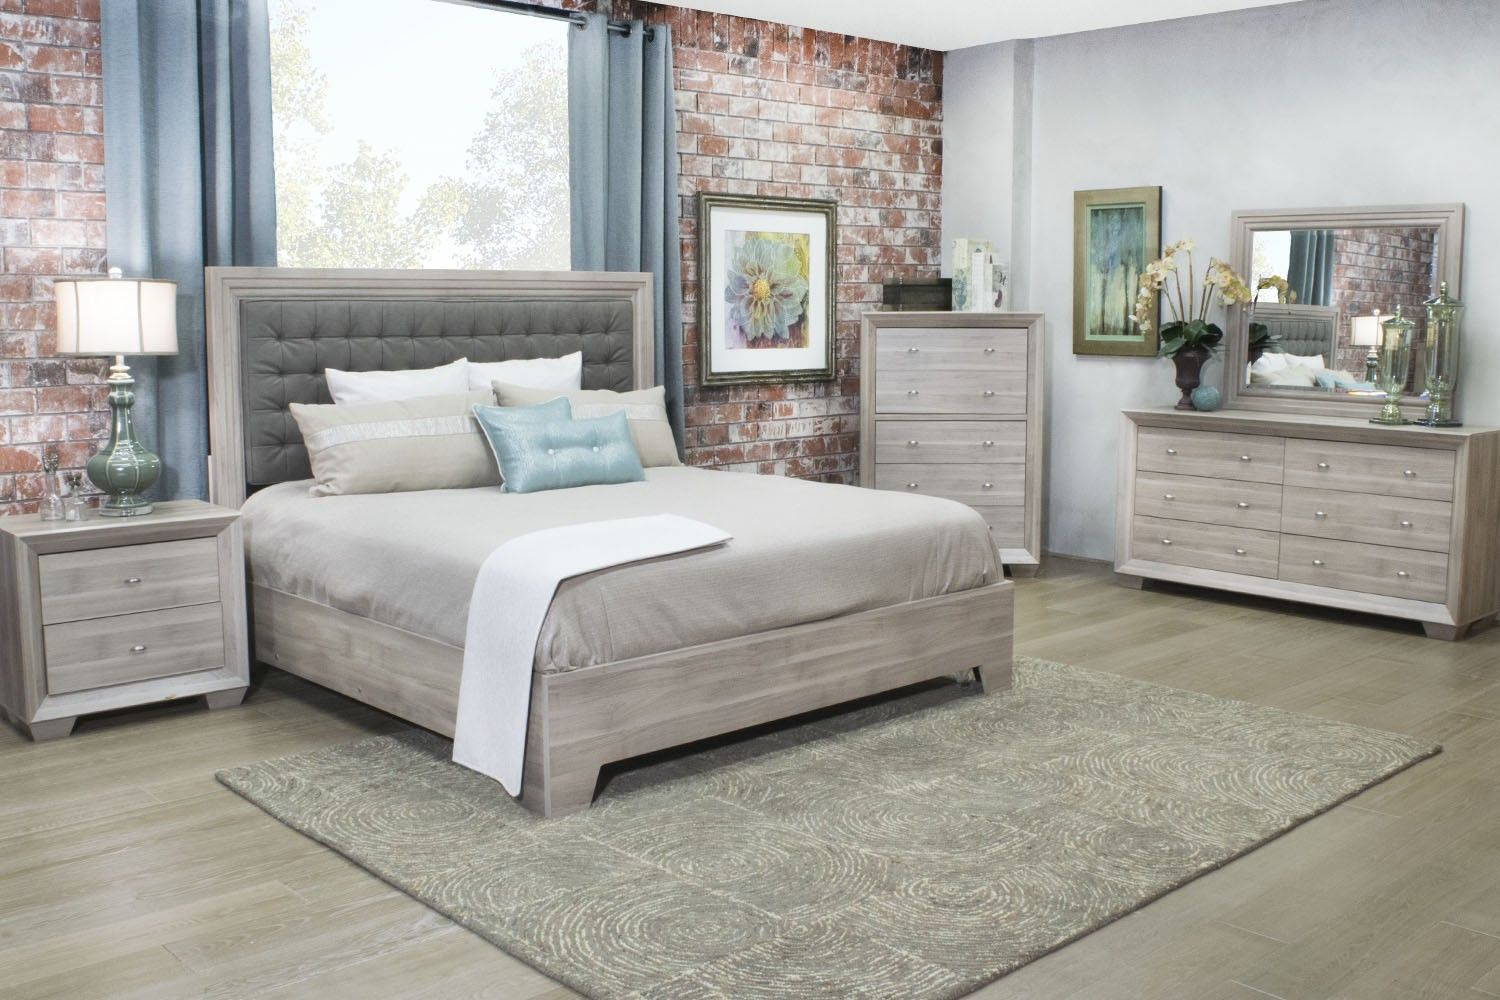 birch colored bedroom furniture